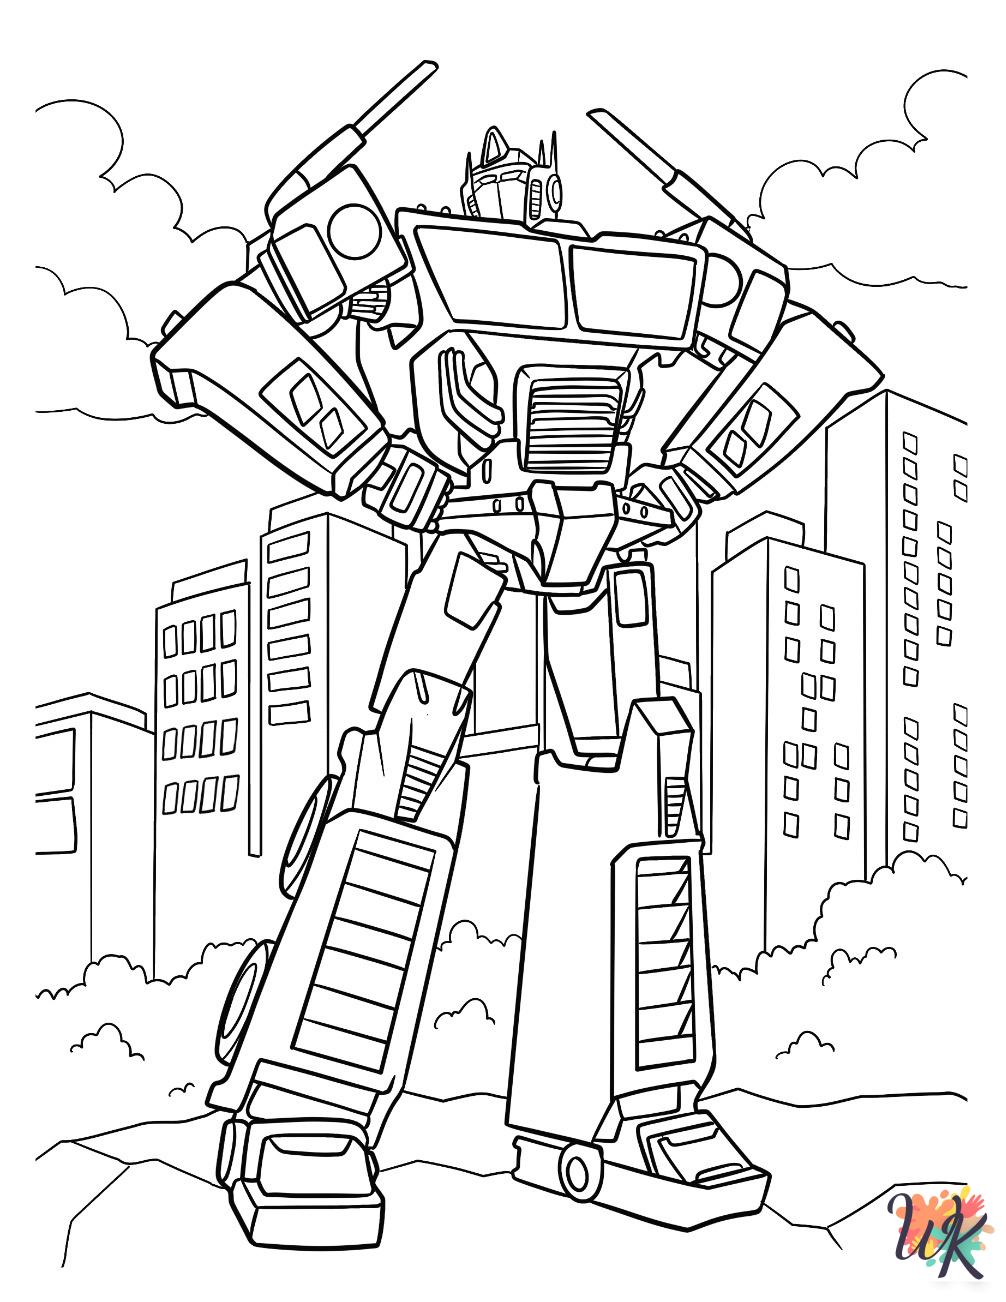 Optimus Prime coloring pages pdf